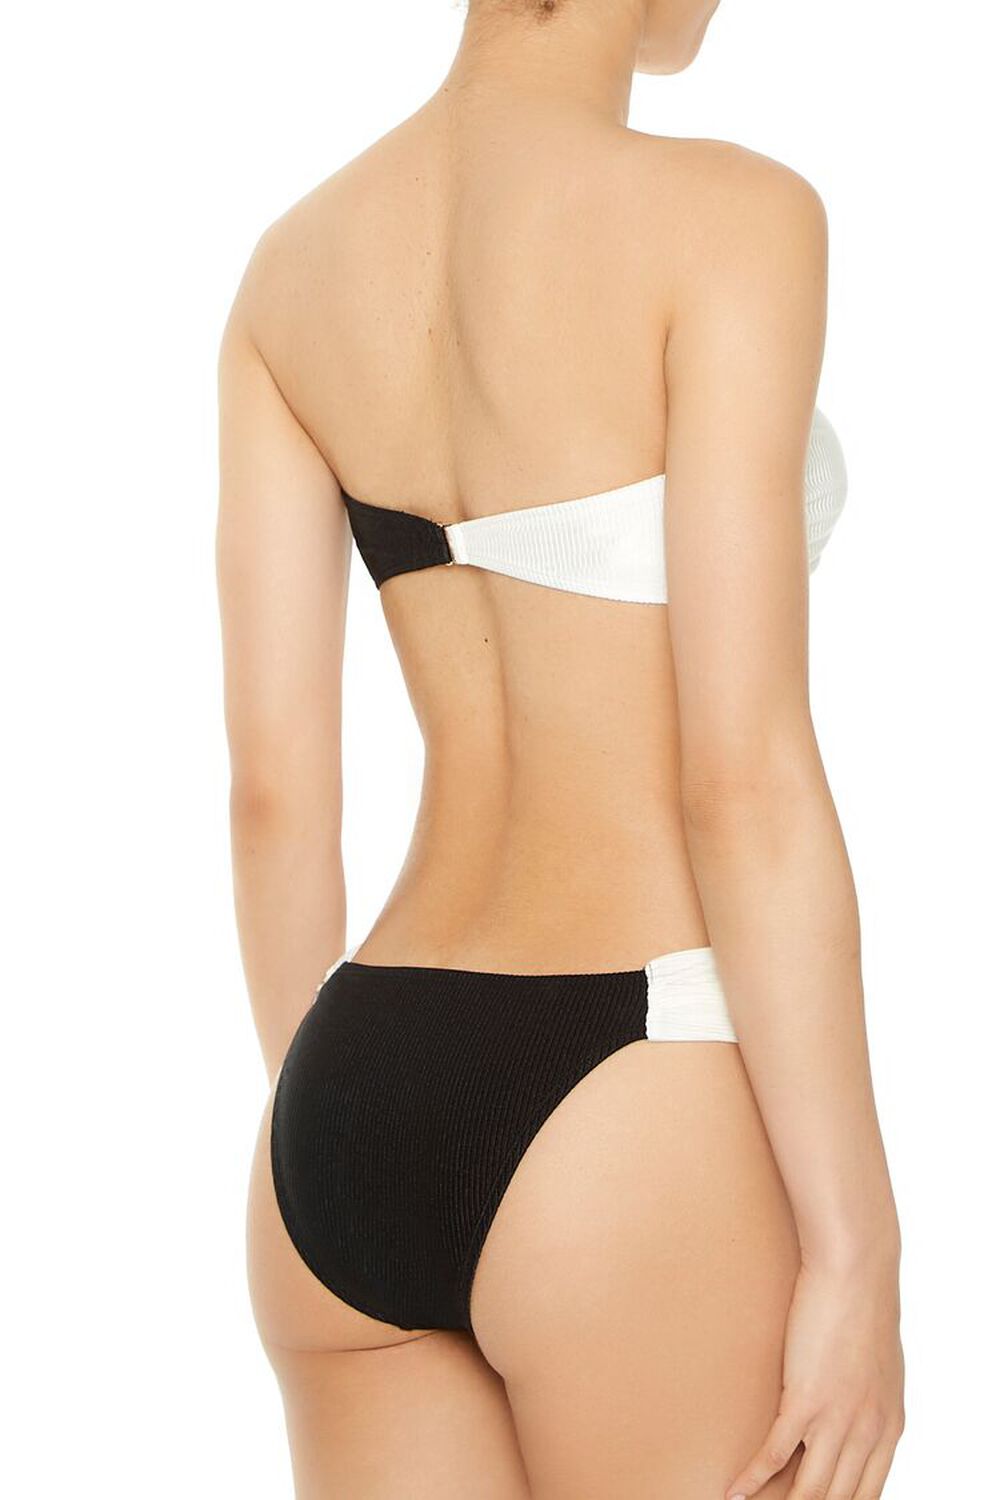 BLACK/WHITE Colorblock Bikini Bottoms, image 3